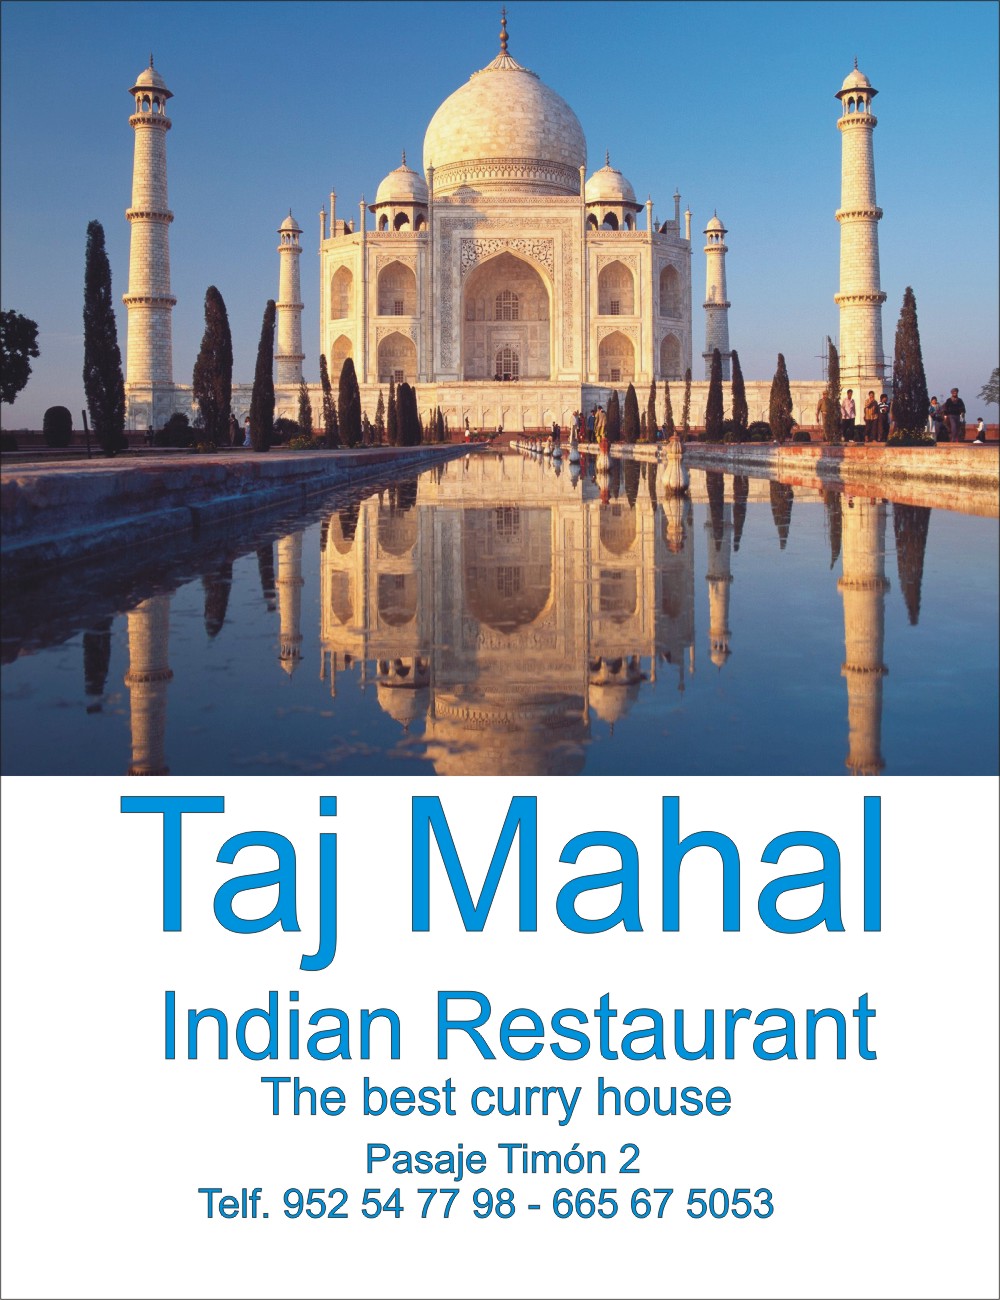 Taj Mahal Indian Restaurant, The best curry house